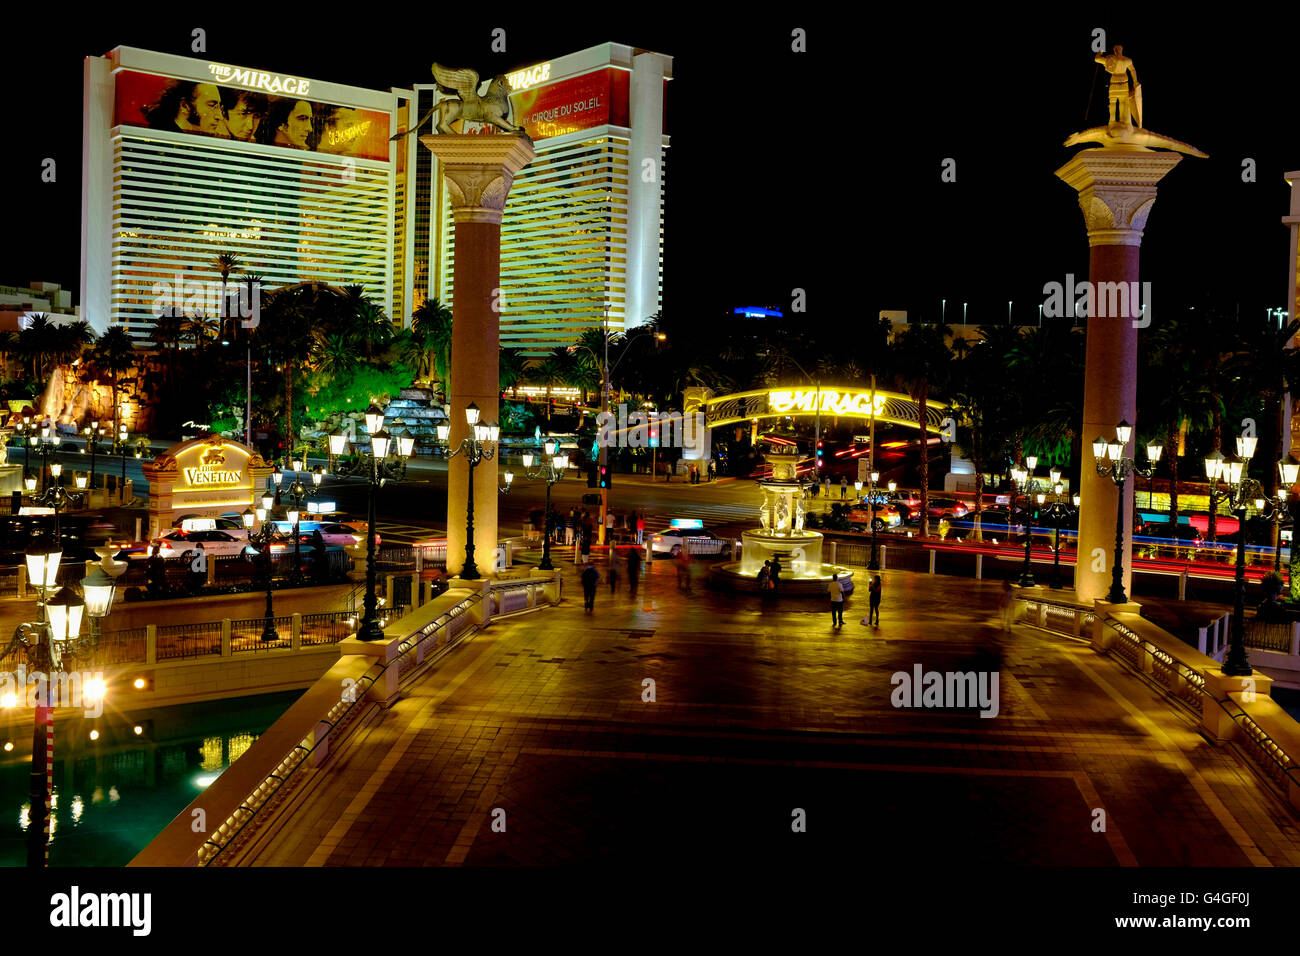 Le Mirage Hotel and Casino, Las Vegas Banque D'Images